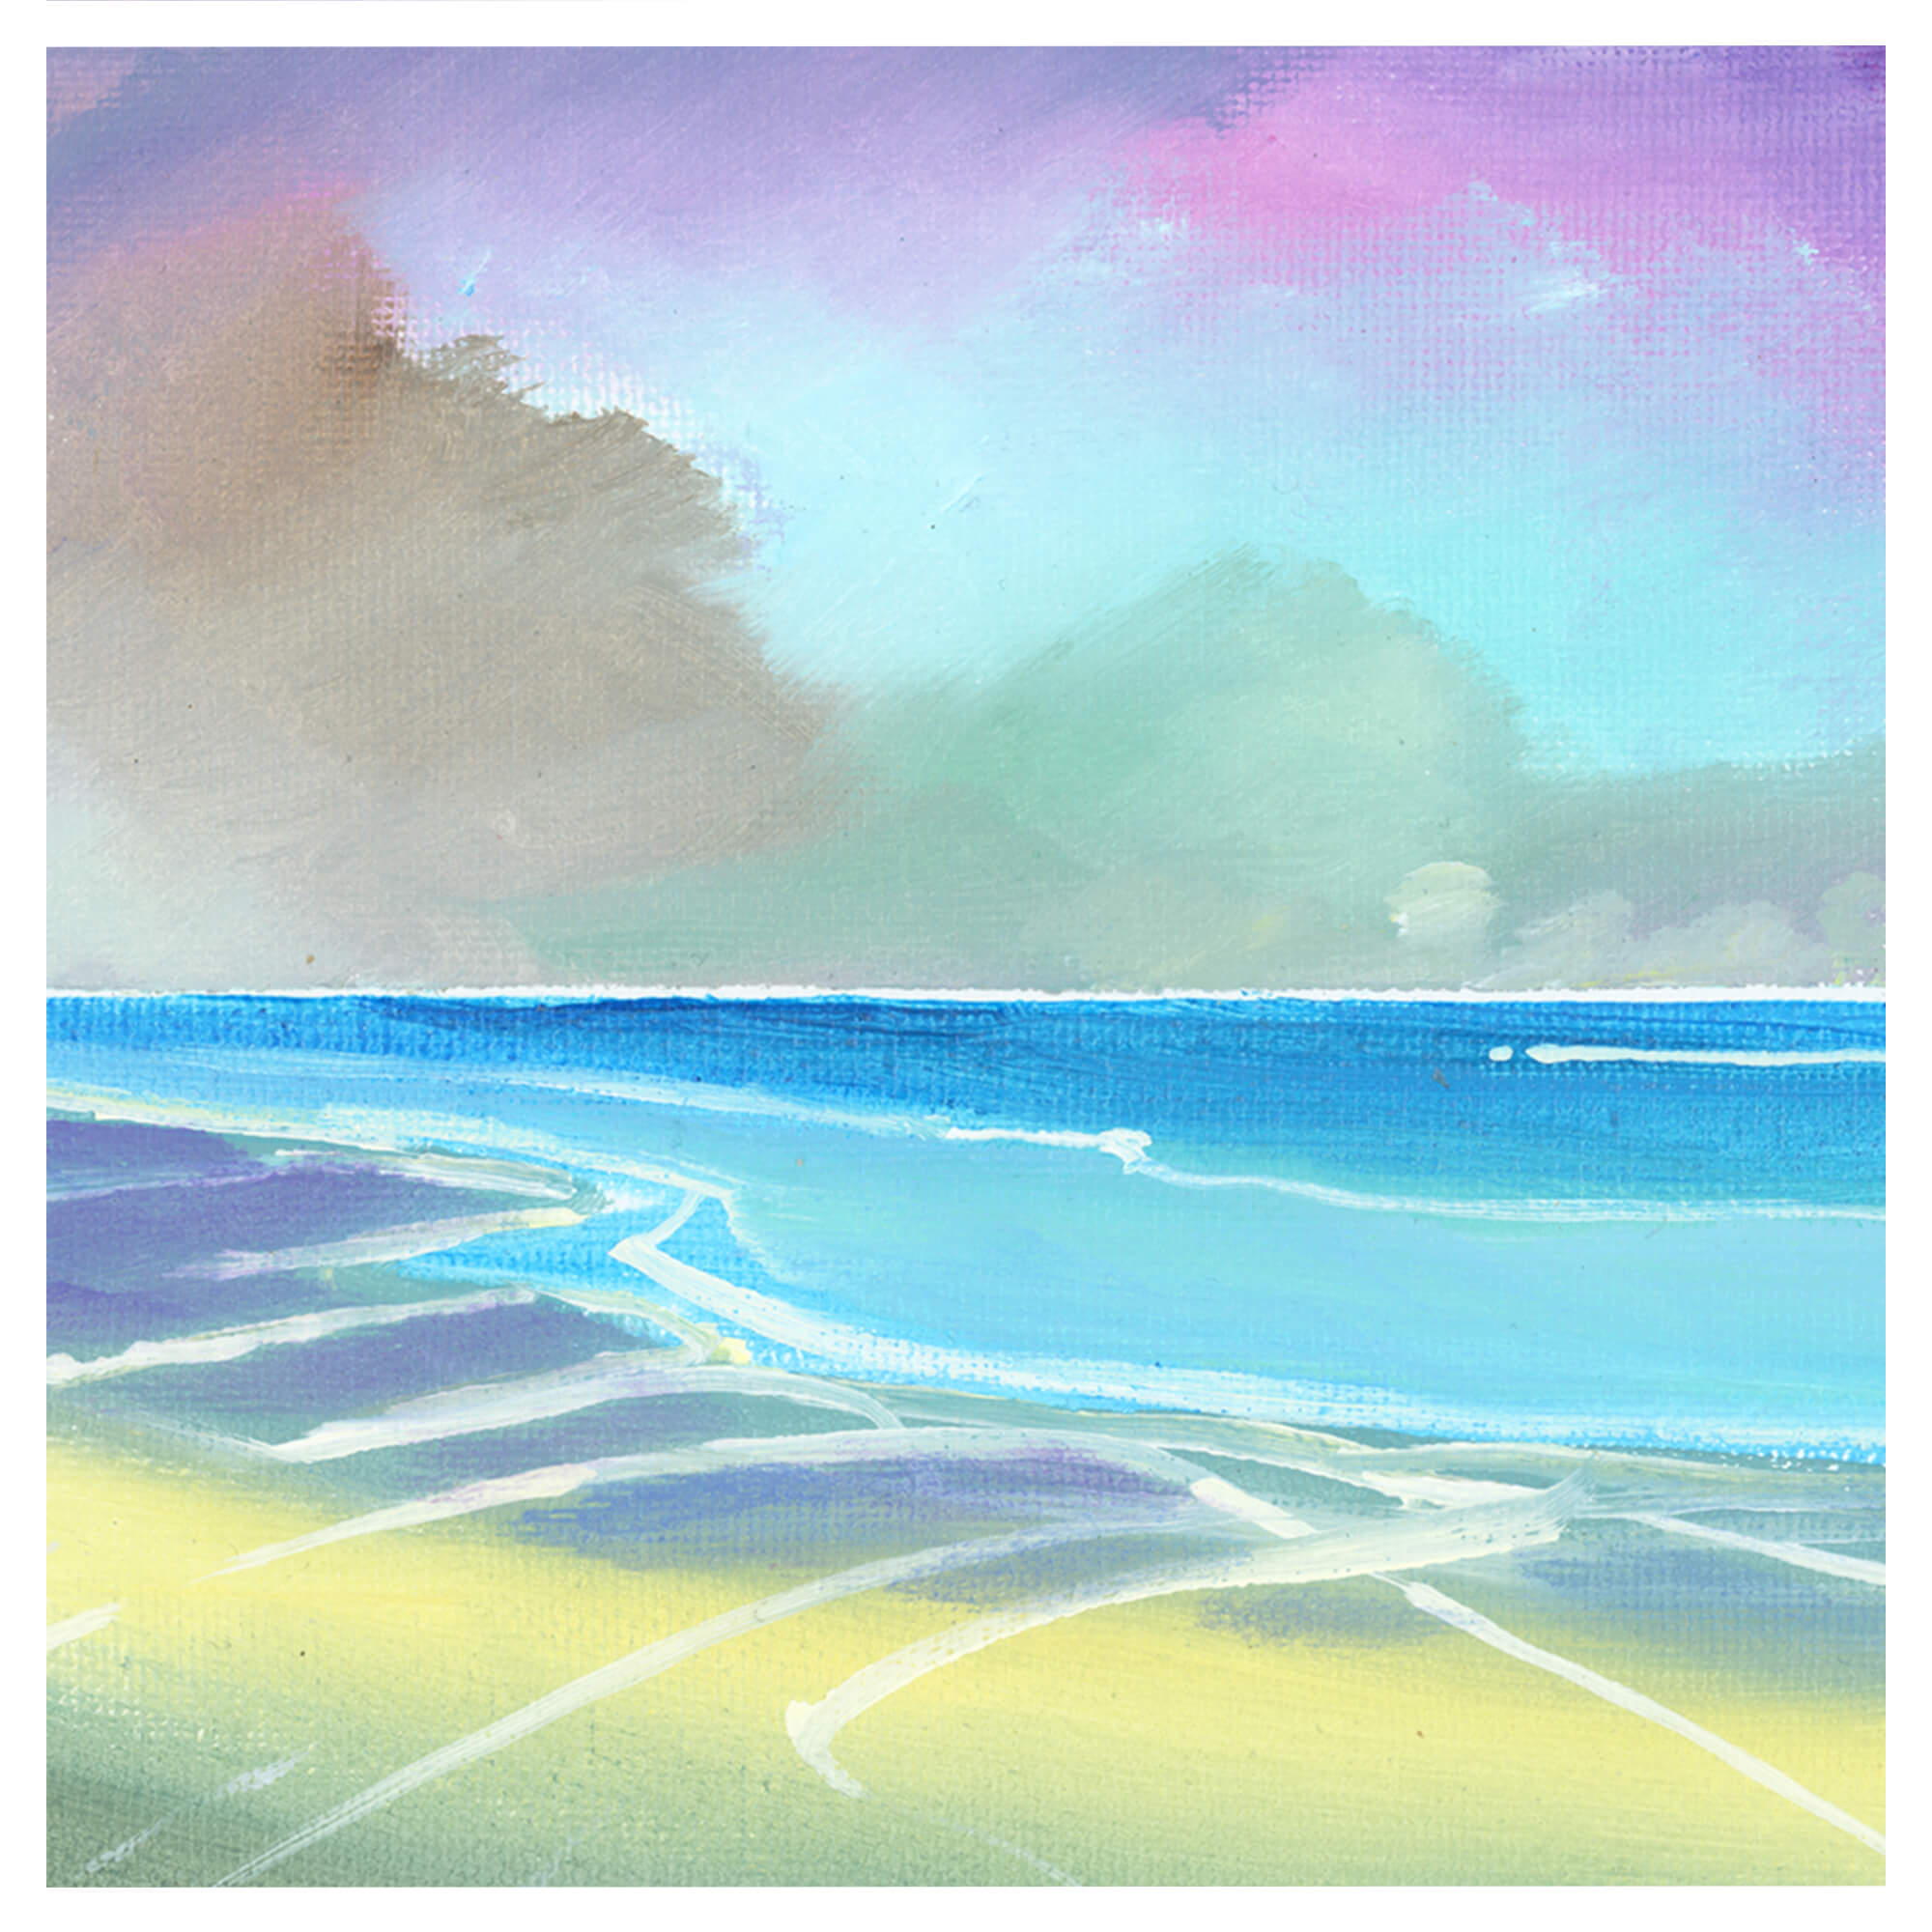 Pastel colored sky and ocean by Hawaii artist Saumolia Puapuaga